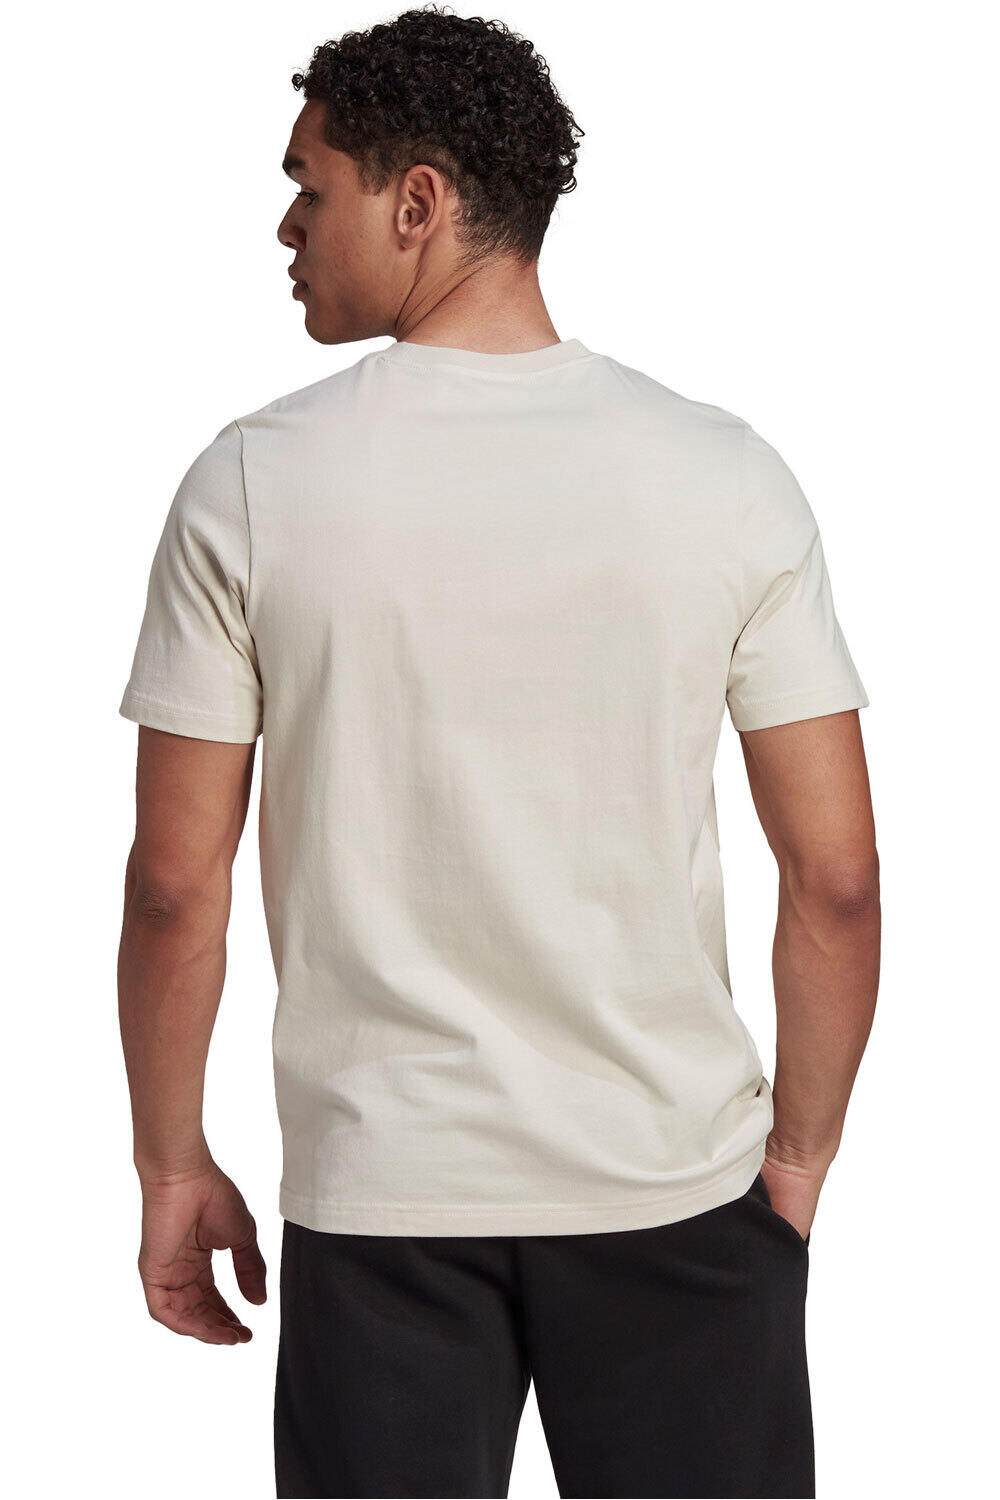 Adidas Essentials Big Logo T-Shirt aluminium white